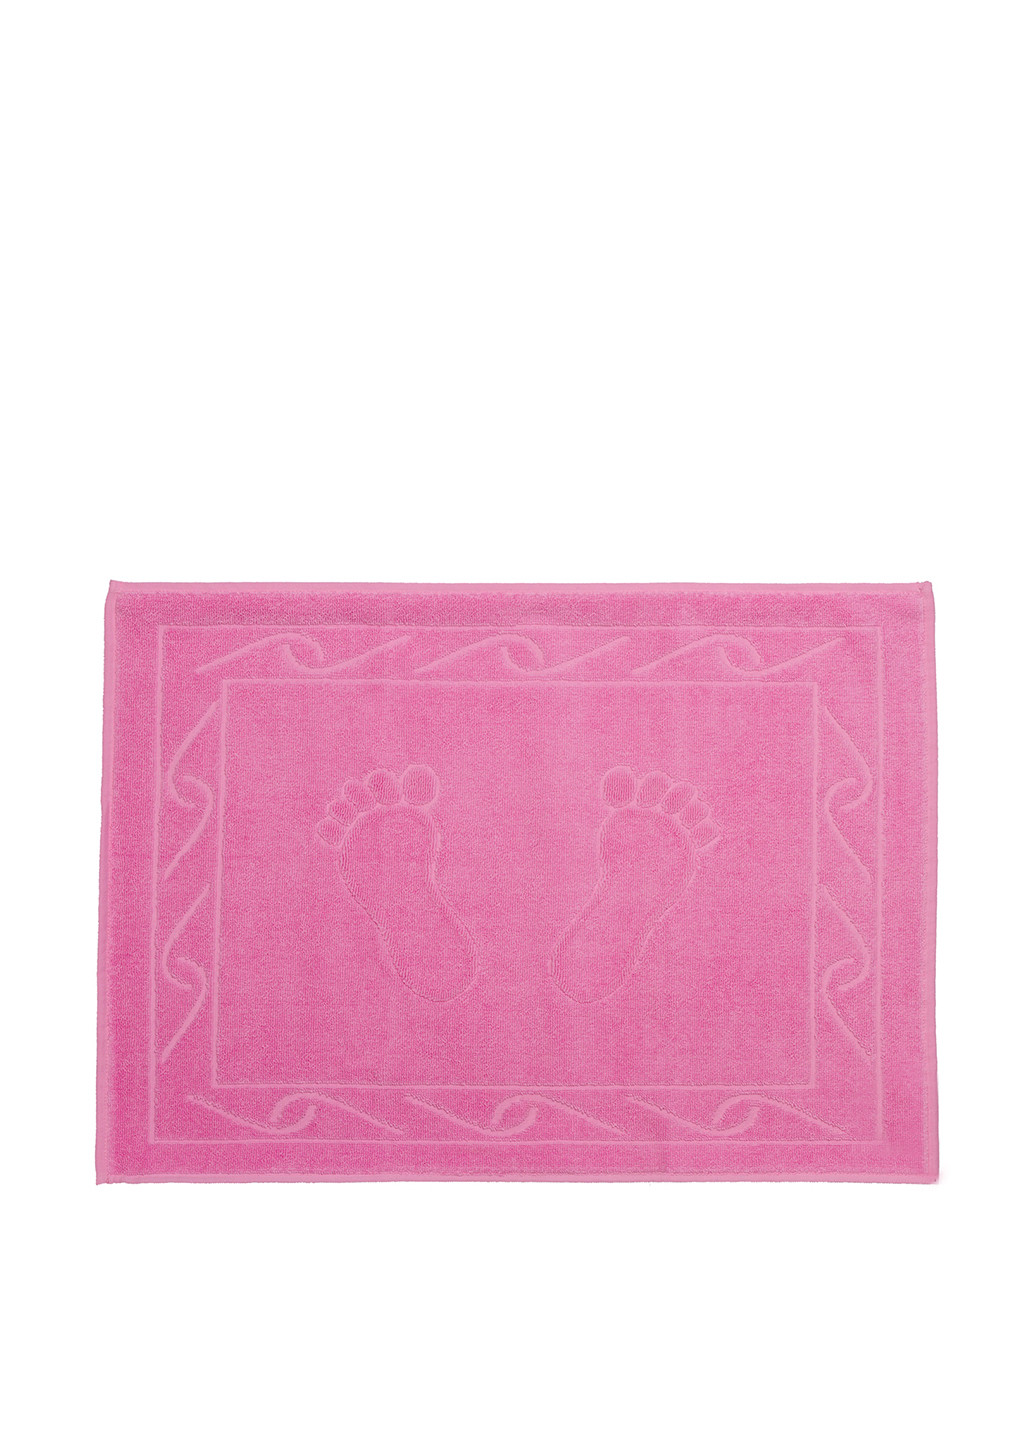 Creative Hobby полотенце, 50х70 см фактура розовый производство - Турция